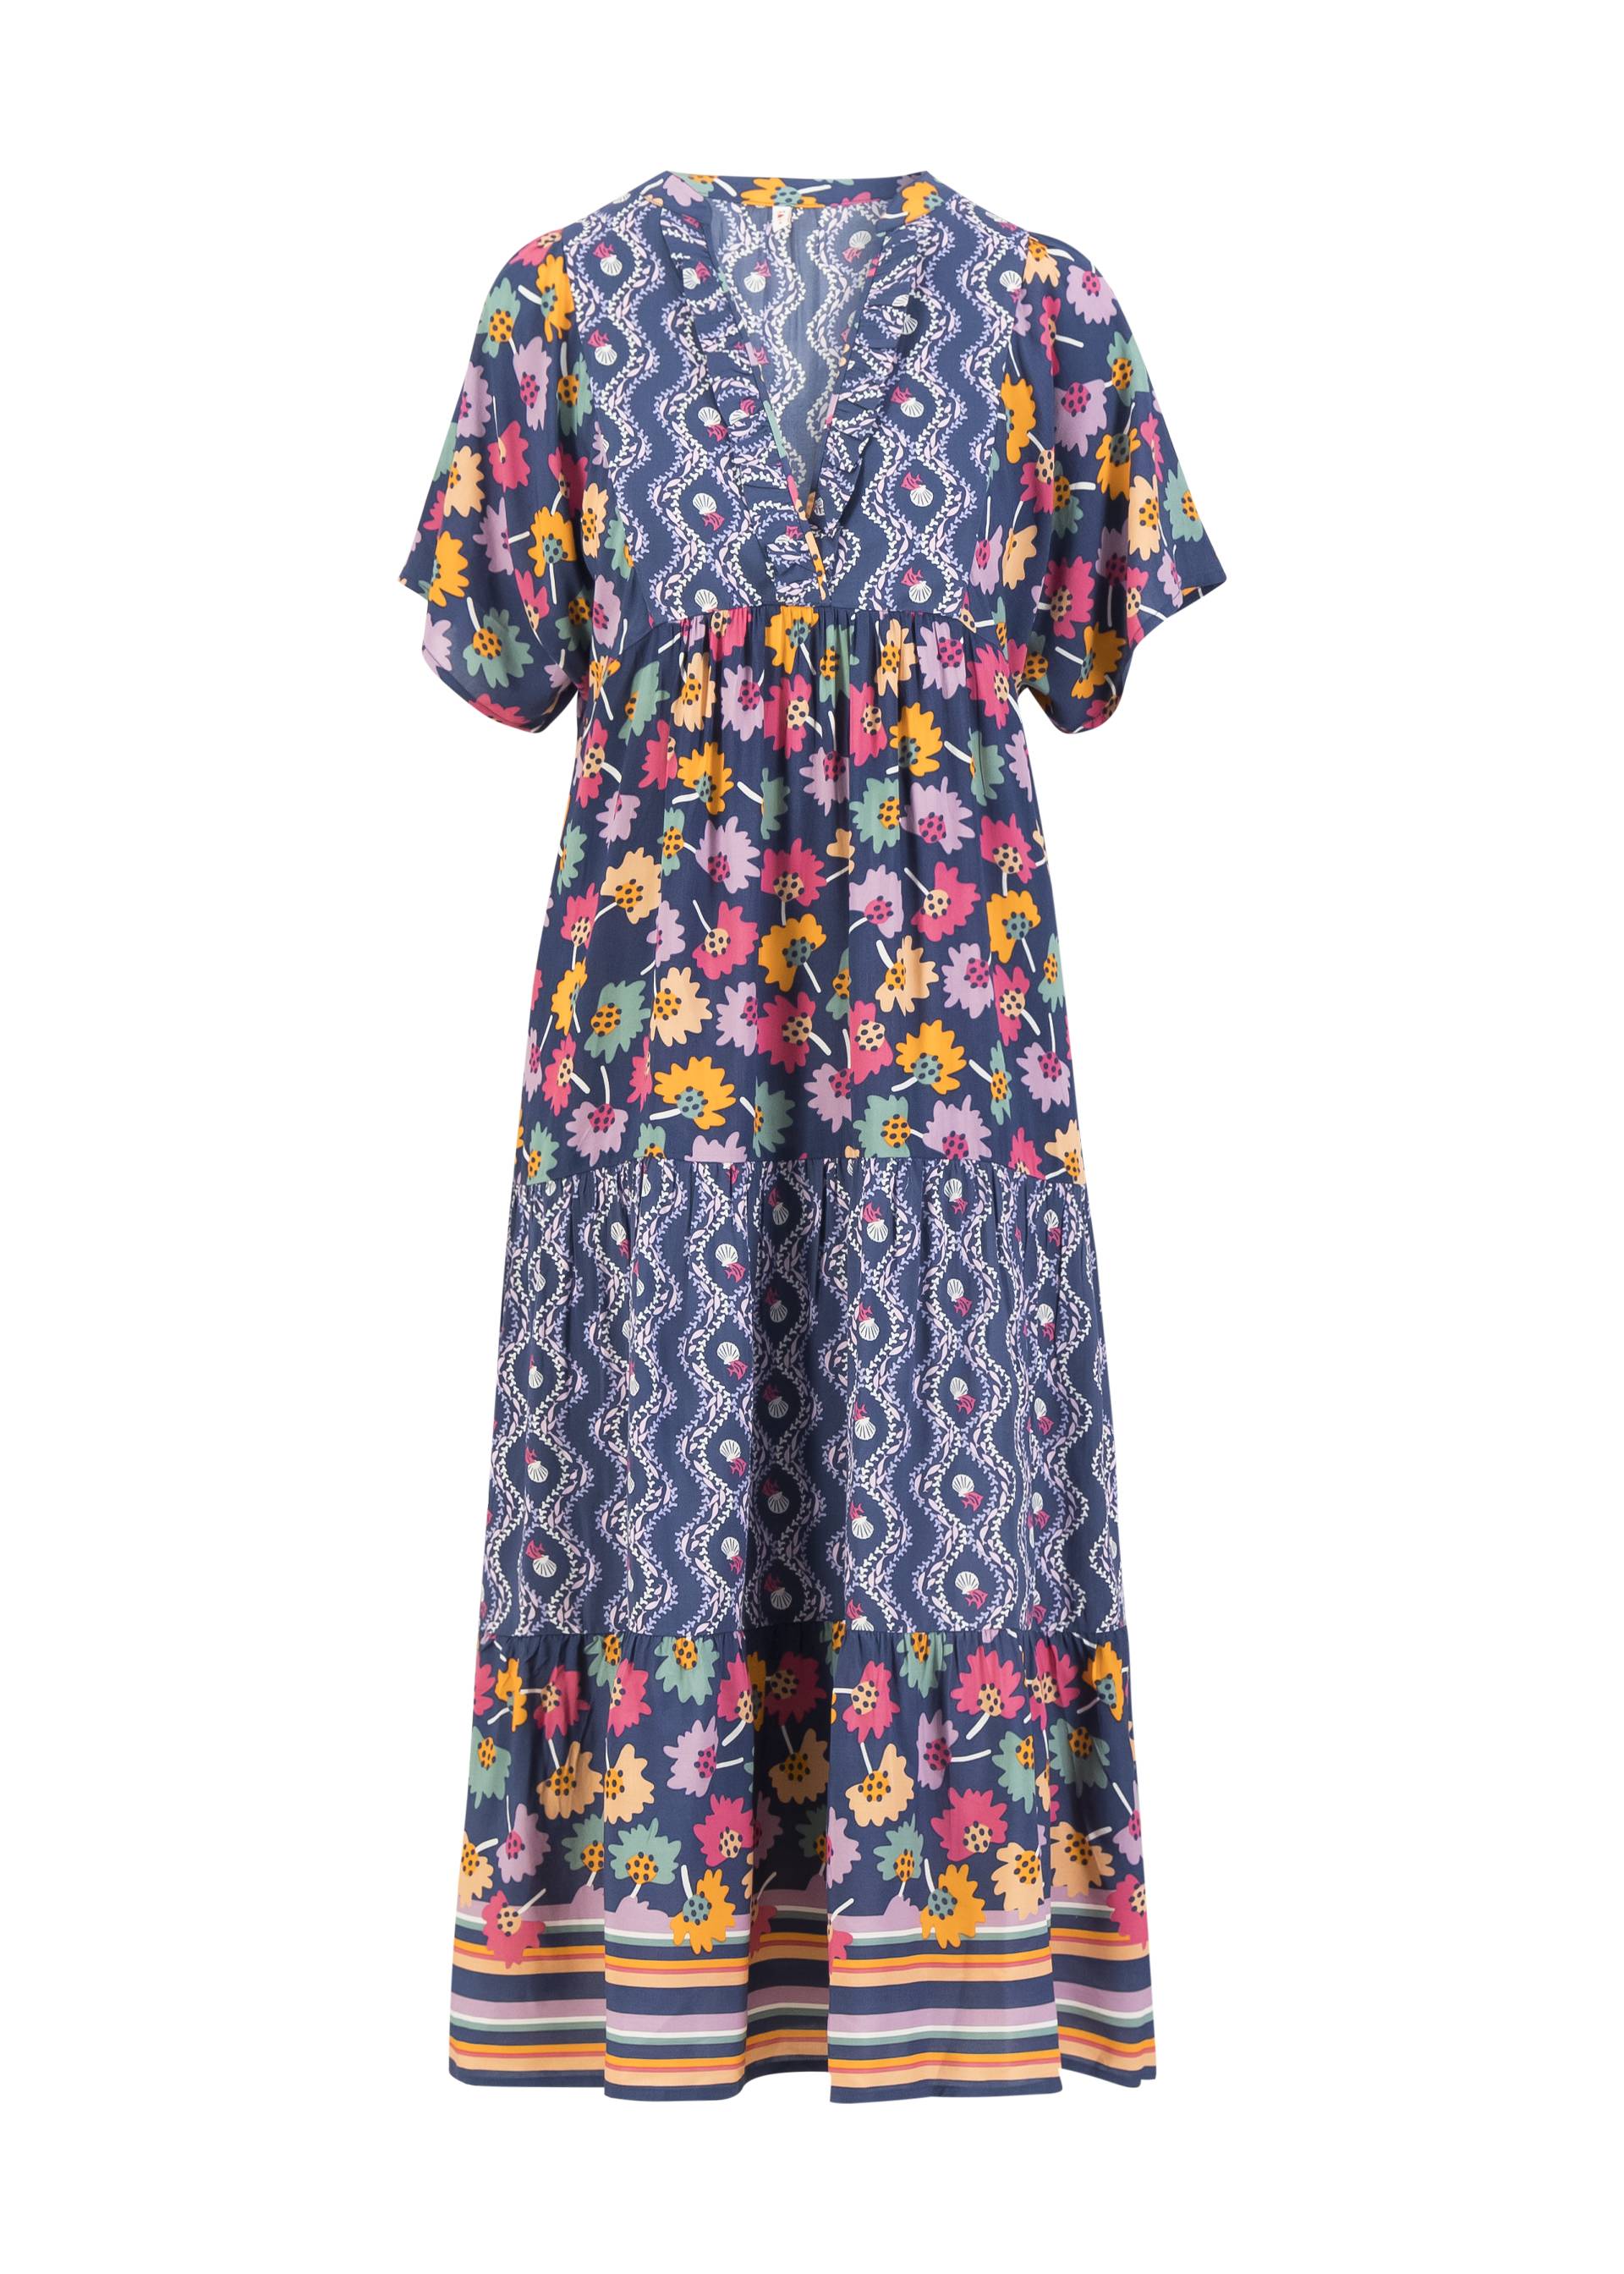 Summer Dress Saint Tropen, colours of walpurgis night, Dresses, Blue